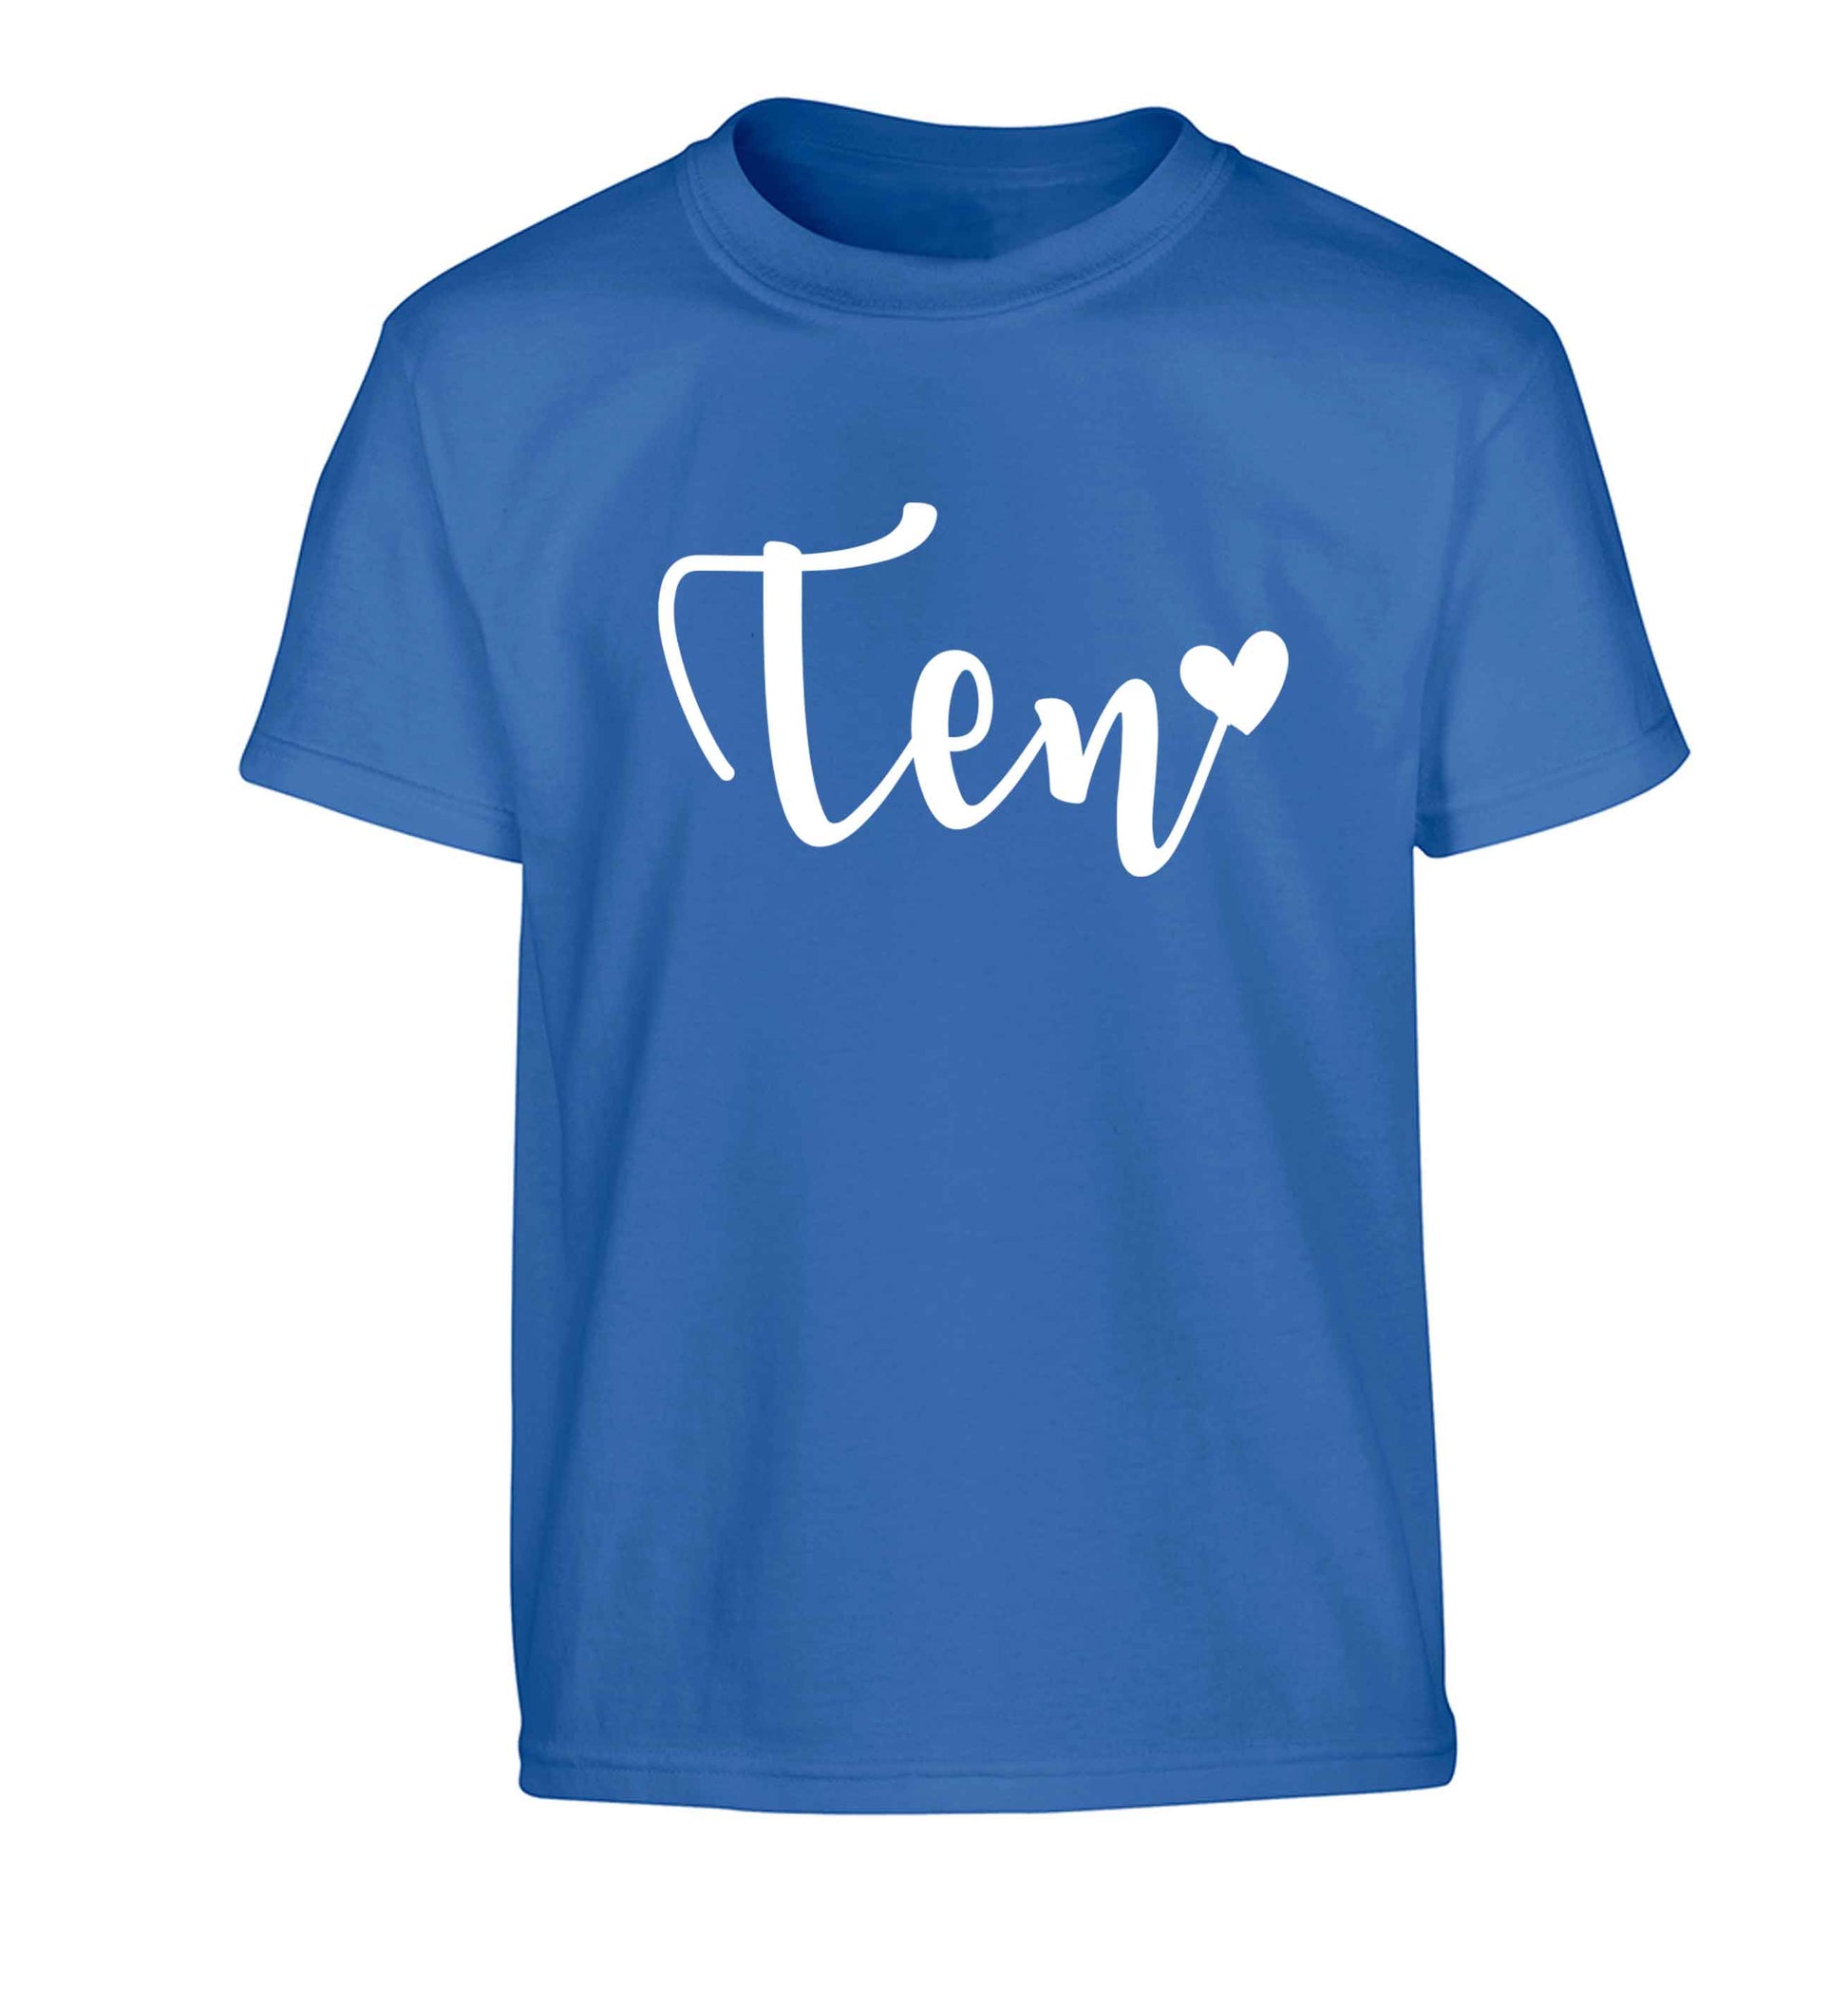 Ten and heart Children's blue Tshirt 12-13 Years